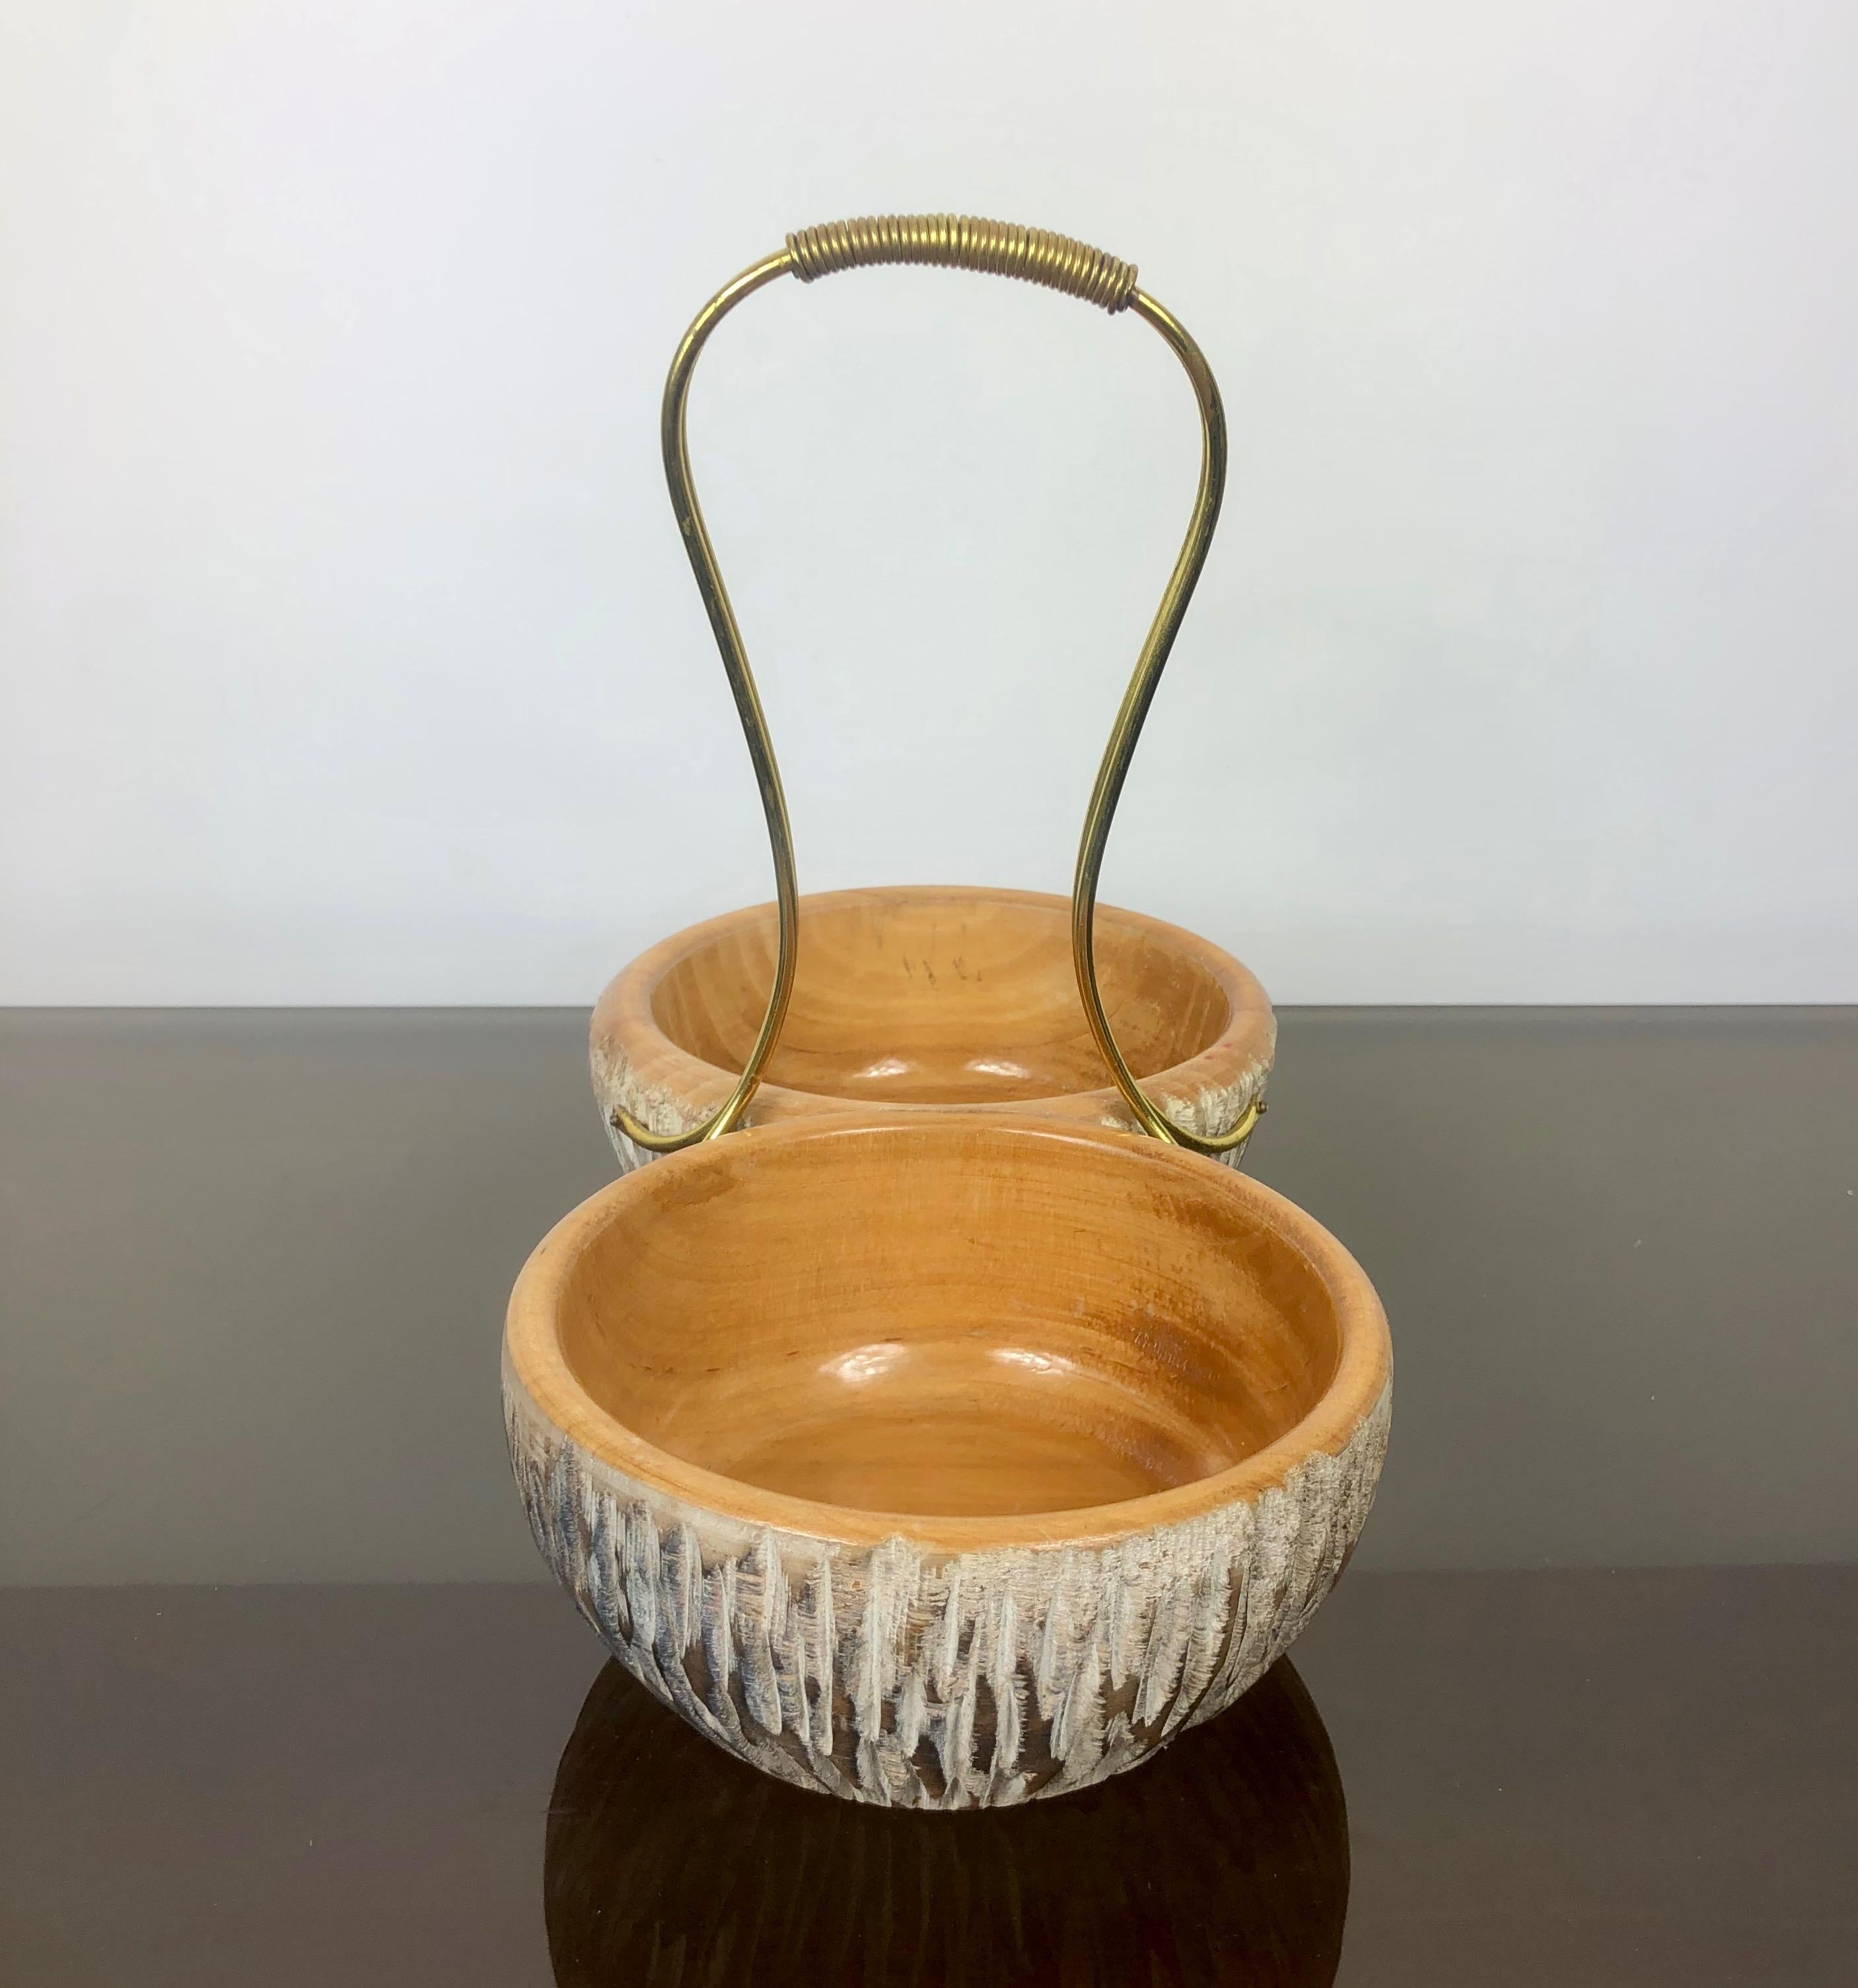 Aldo Tura Macabo Walnut Bowl Basket Centrepiece Hand Carved Wood and Brass Italy 1